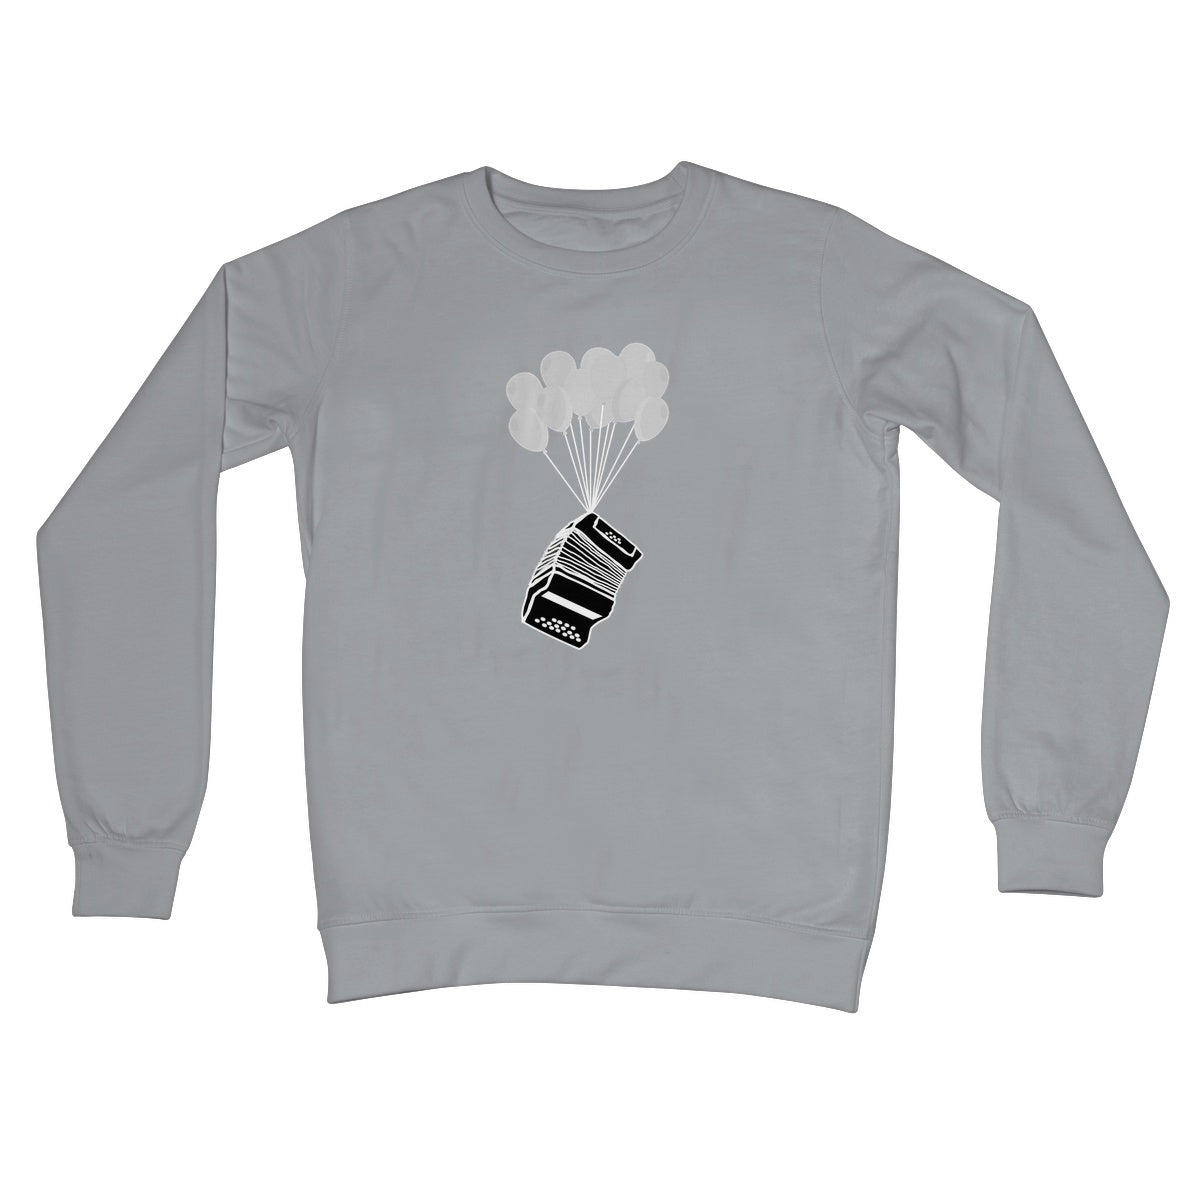 Banksy Style Melodeon Sweatshirt